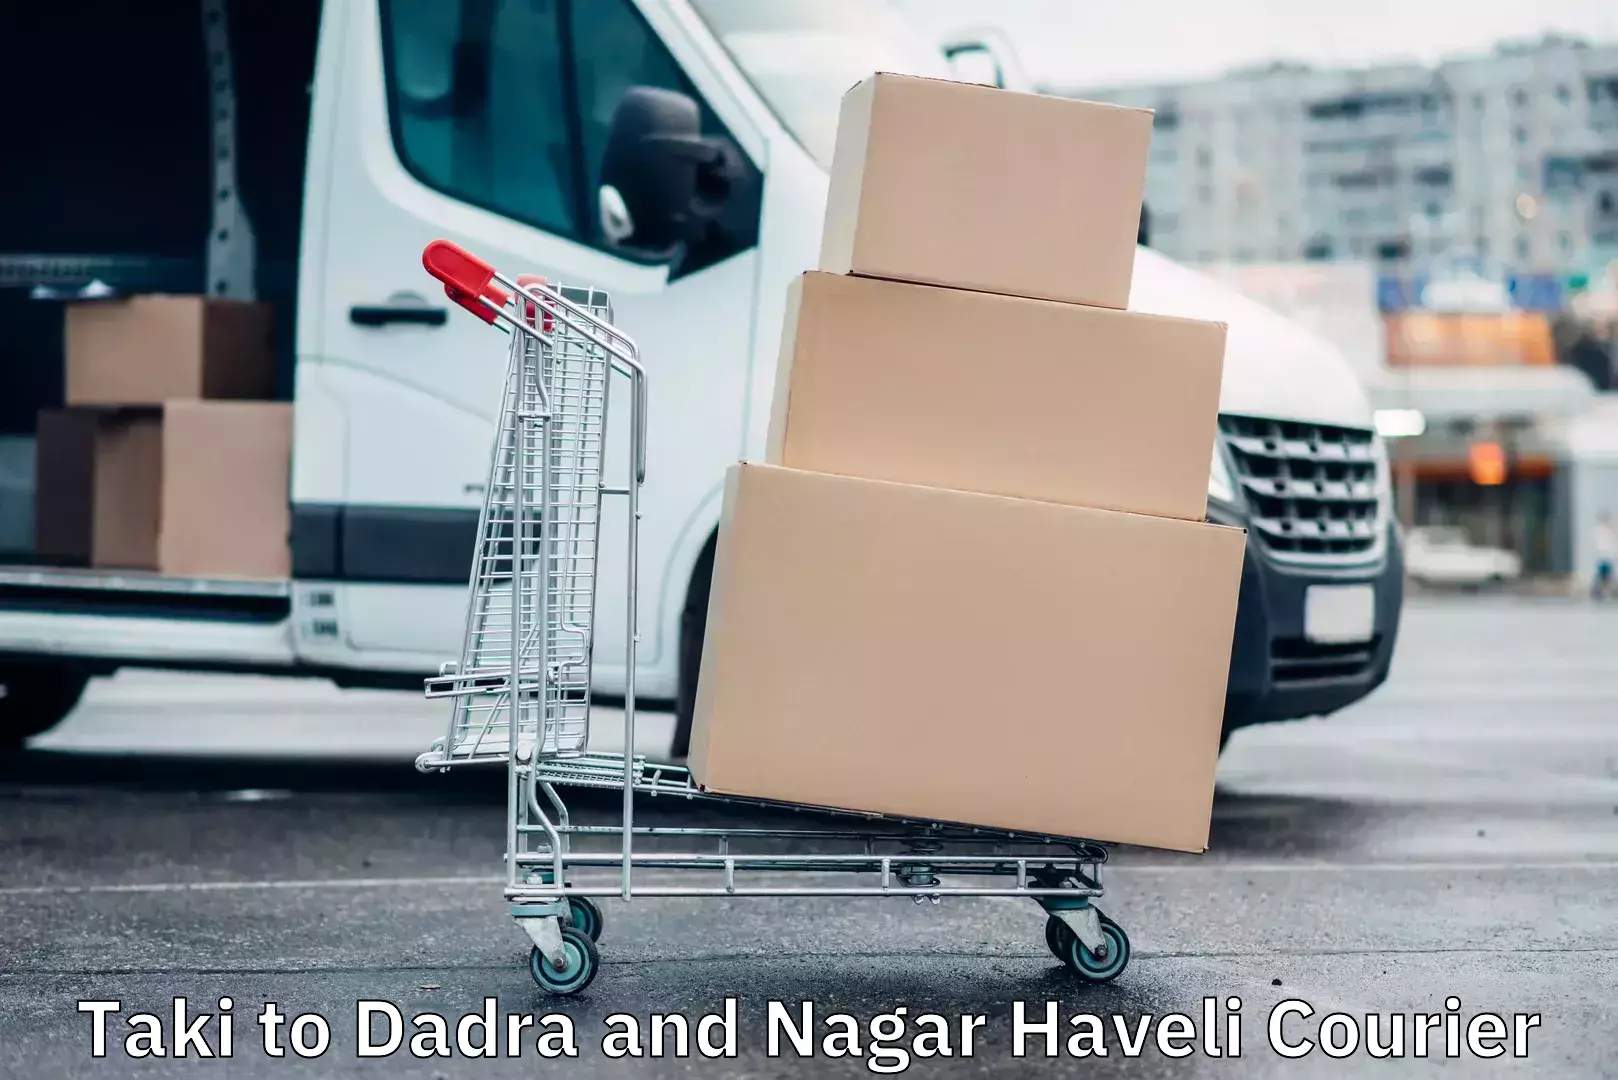 Express logistics service Taki to Dadra and Nagar Haveli